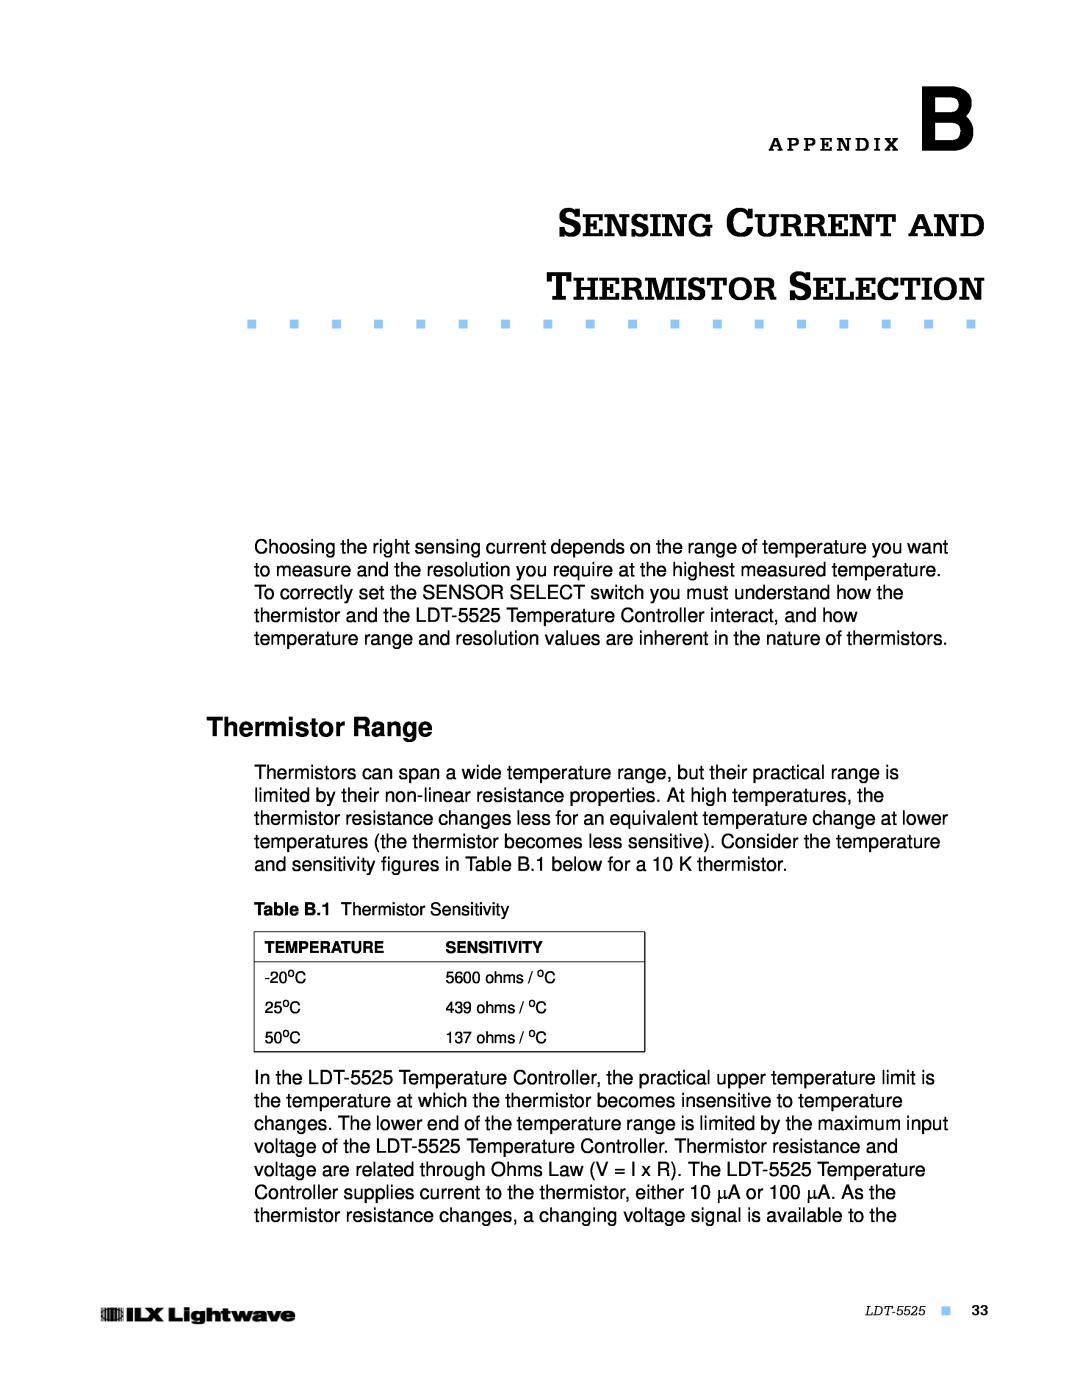 Lightwave Communications LDT-5525 manual Sensing Current And Thermistor Selection, Thermistor Range, A P P E N D I X B 